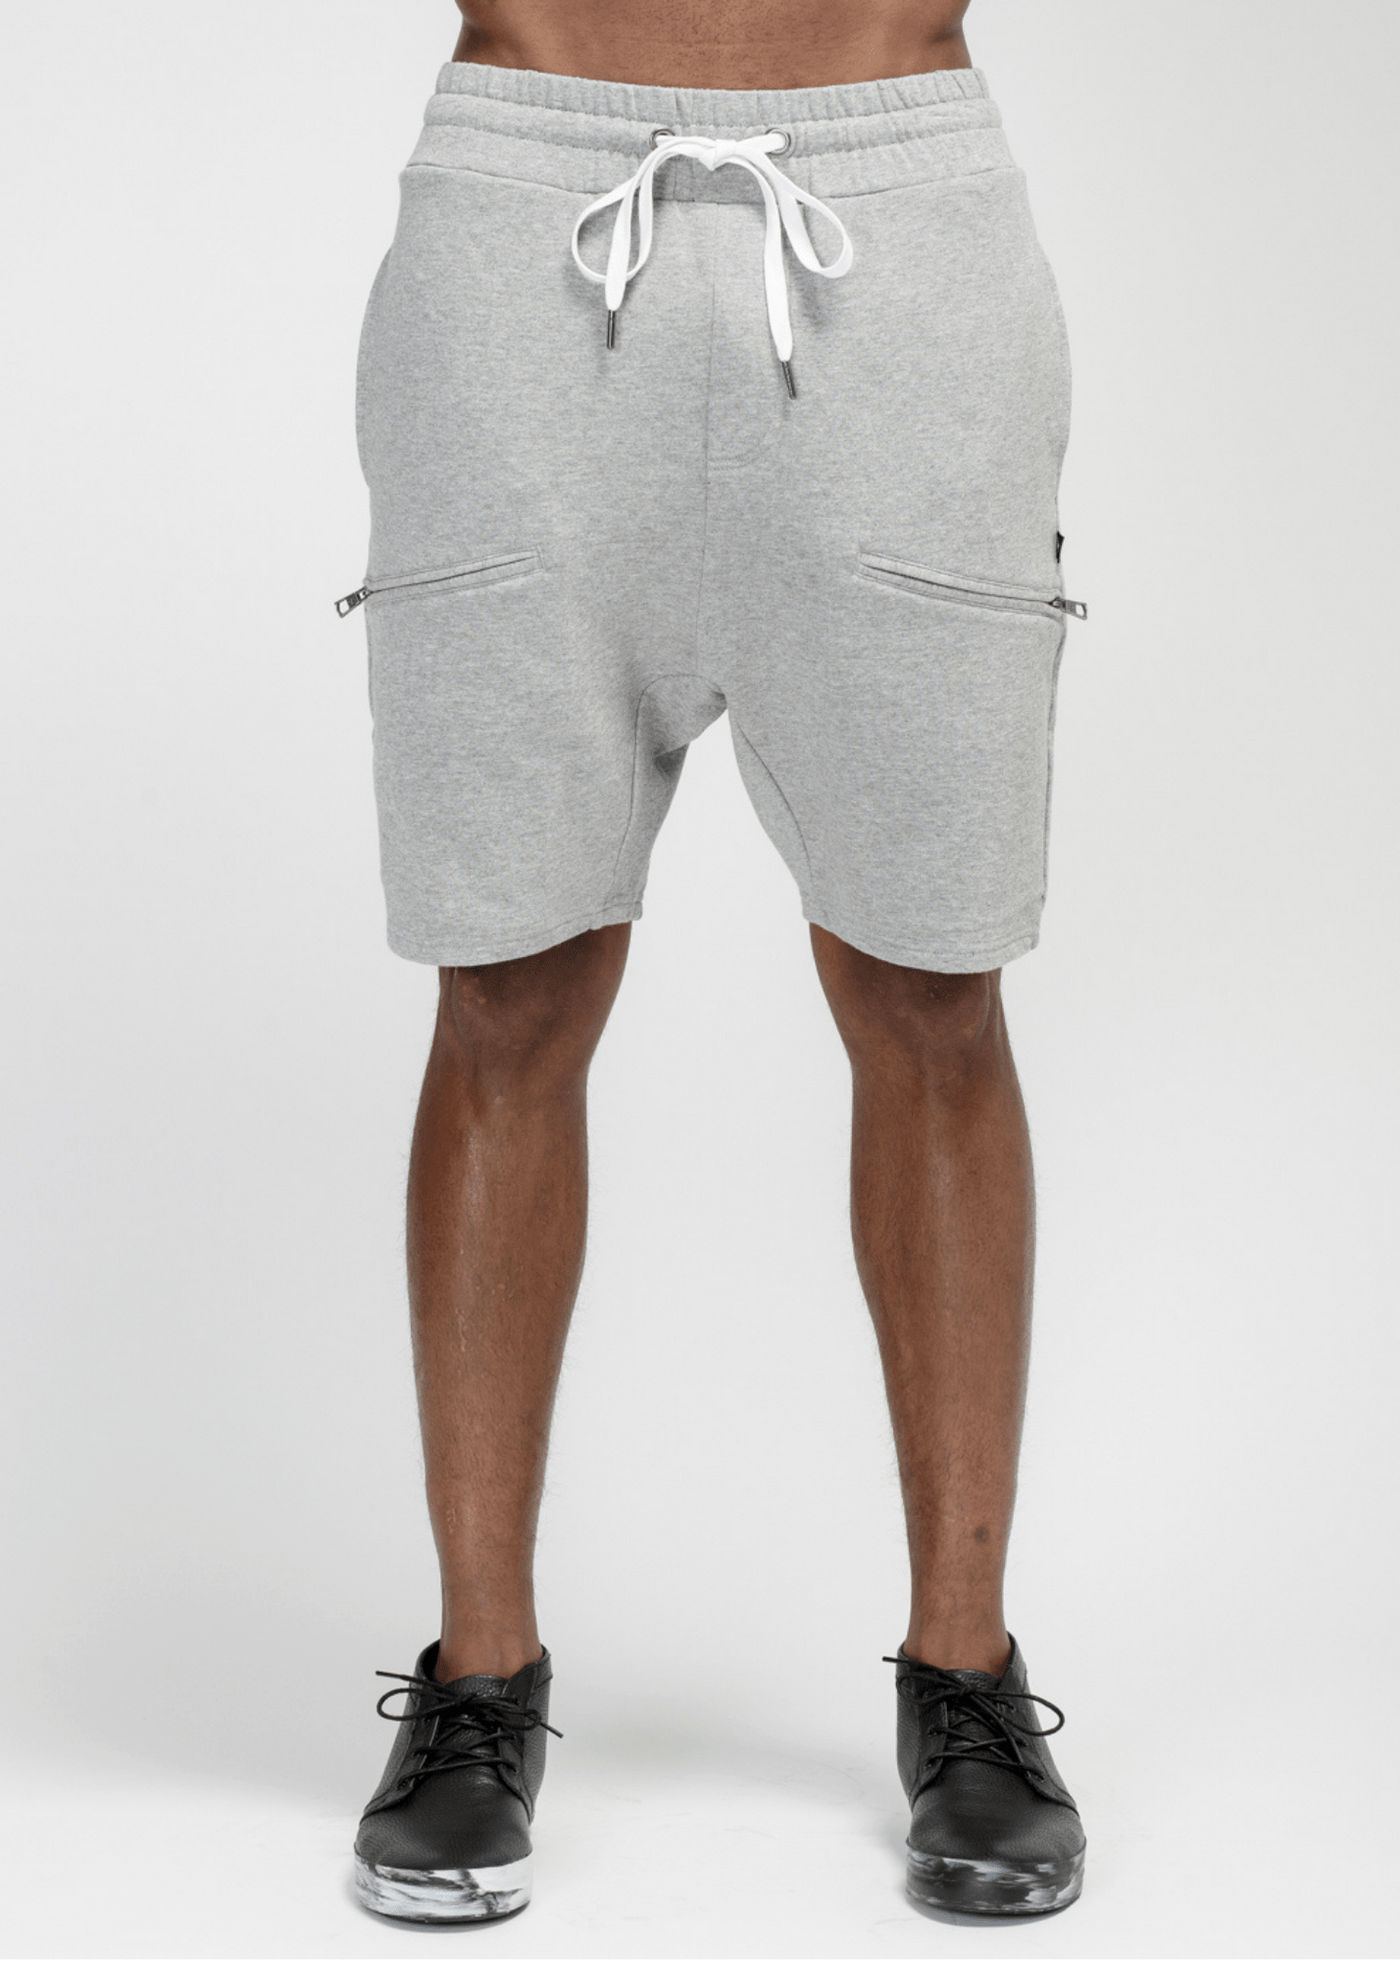 Konus Men's Side Zip Pocket Shorts in Gray by Shop at Konus